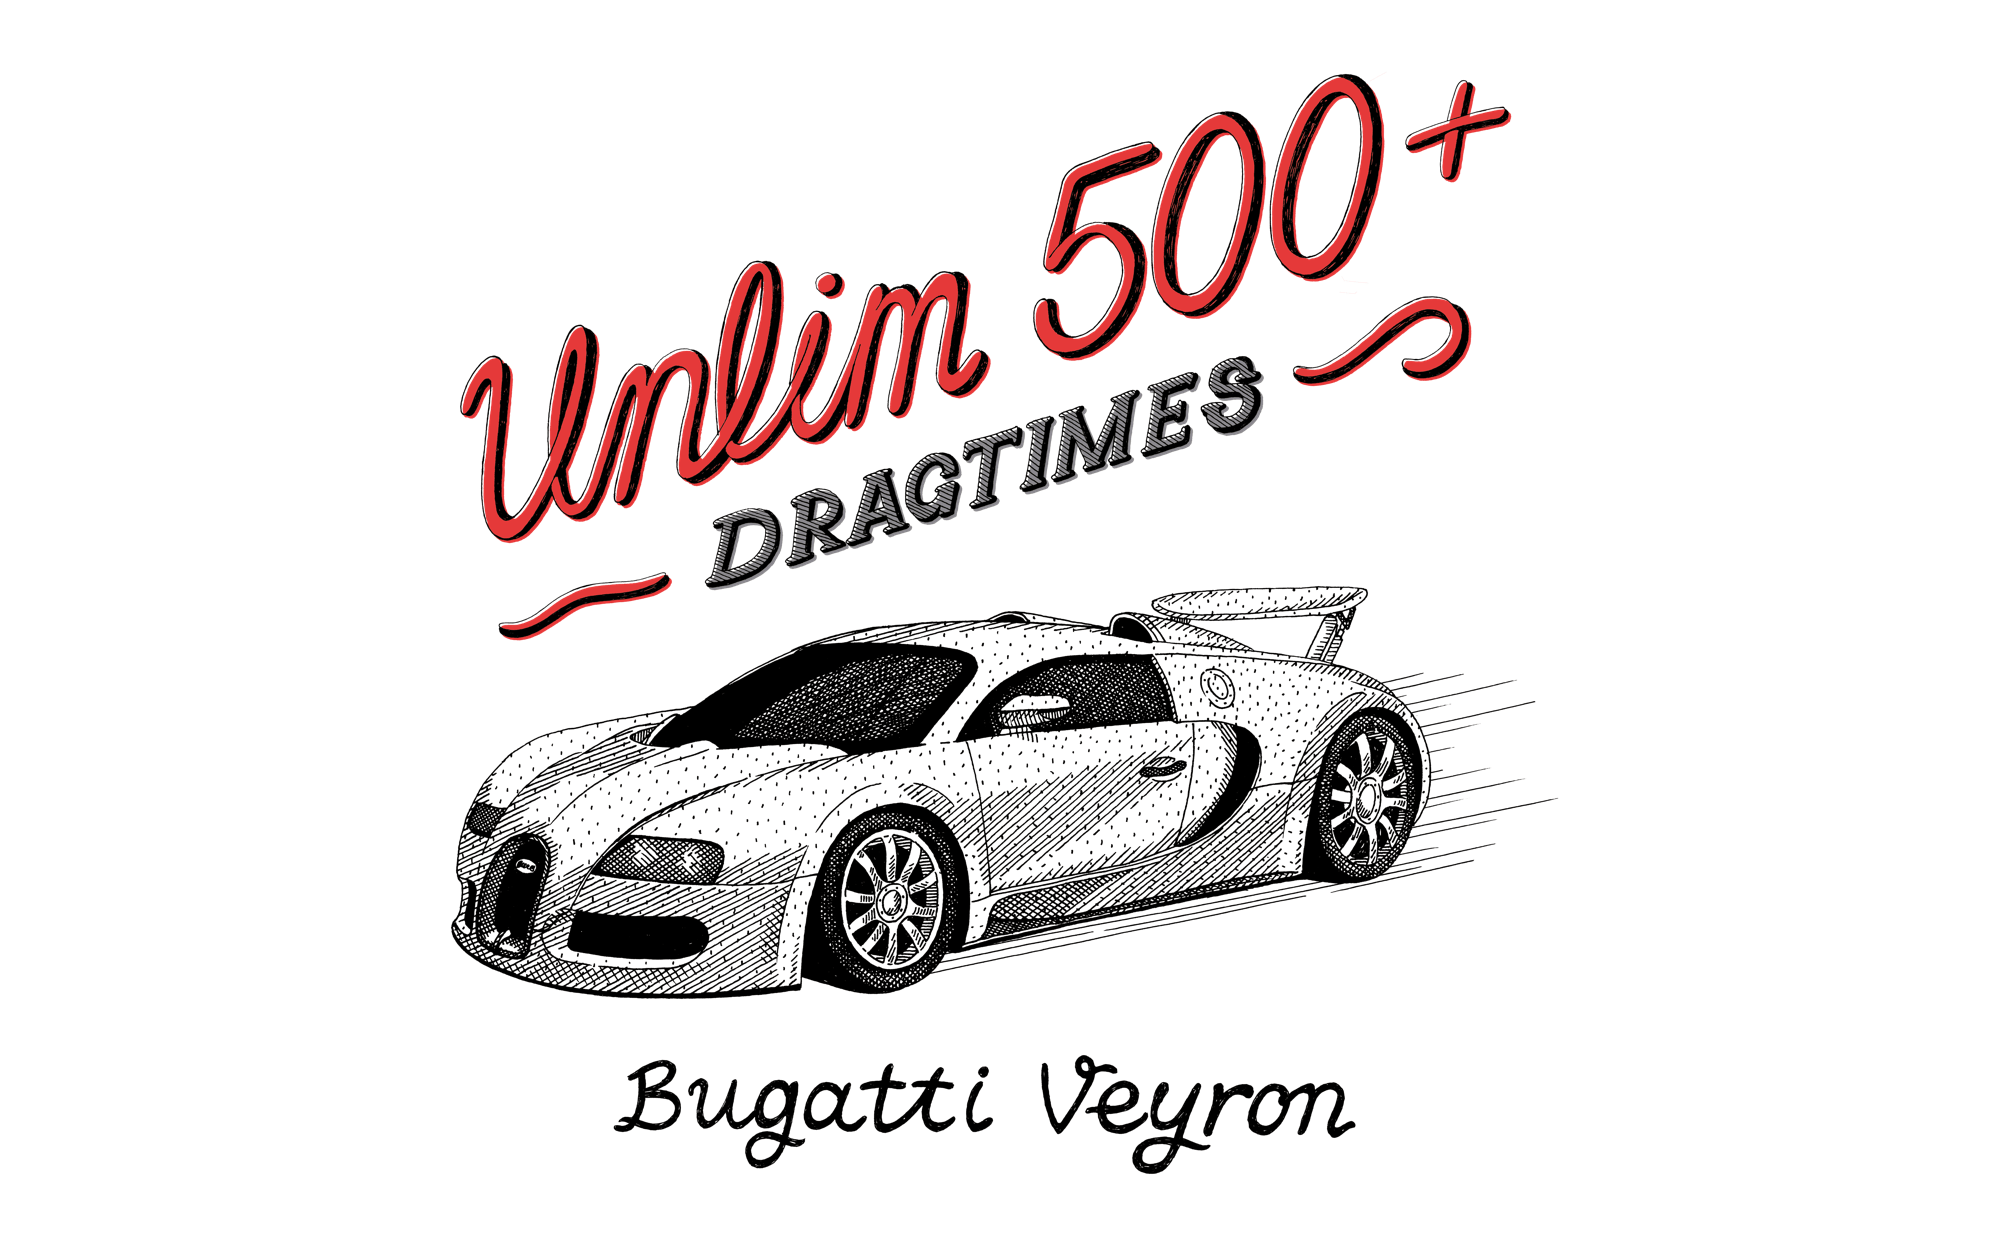 Иллюстрация Bugatti Veyron